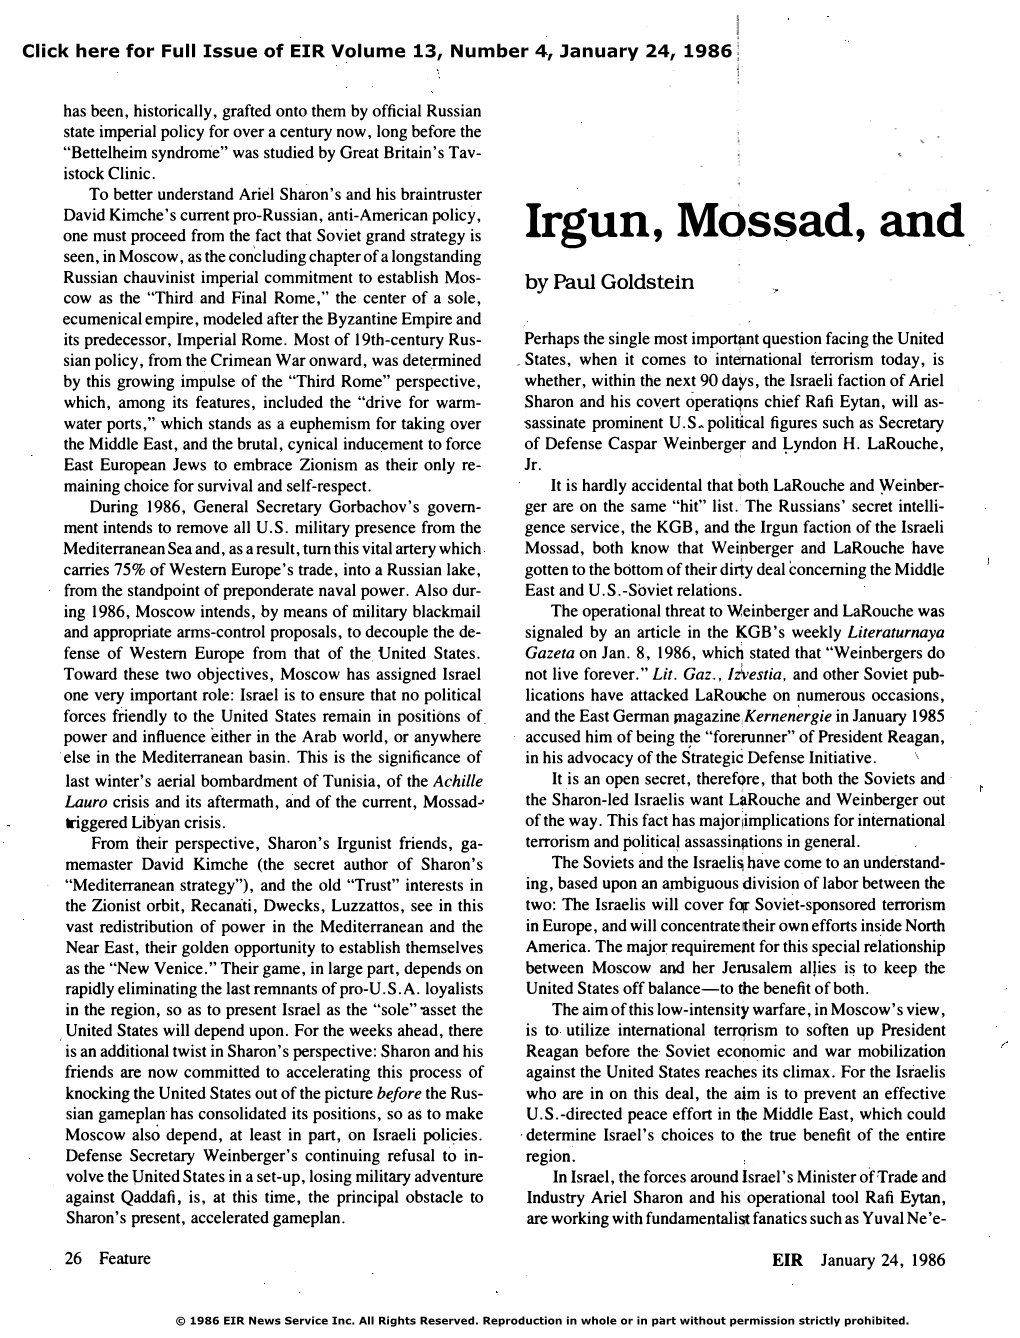 Irgun, Mossad, and Global Terrorism